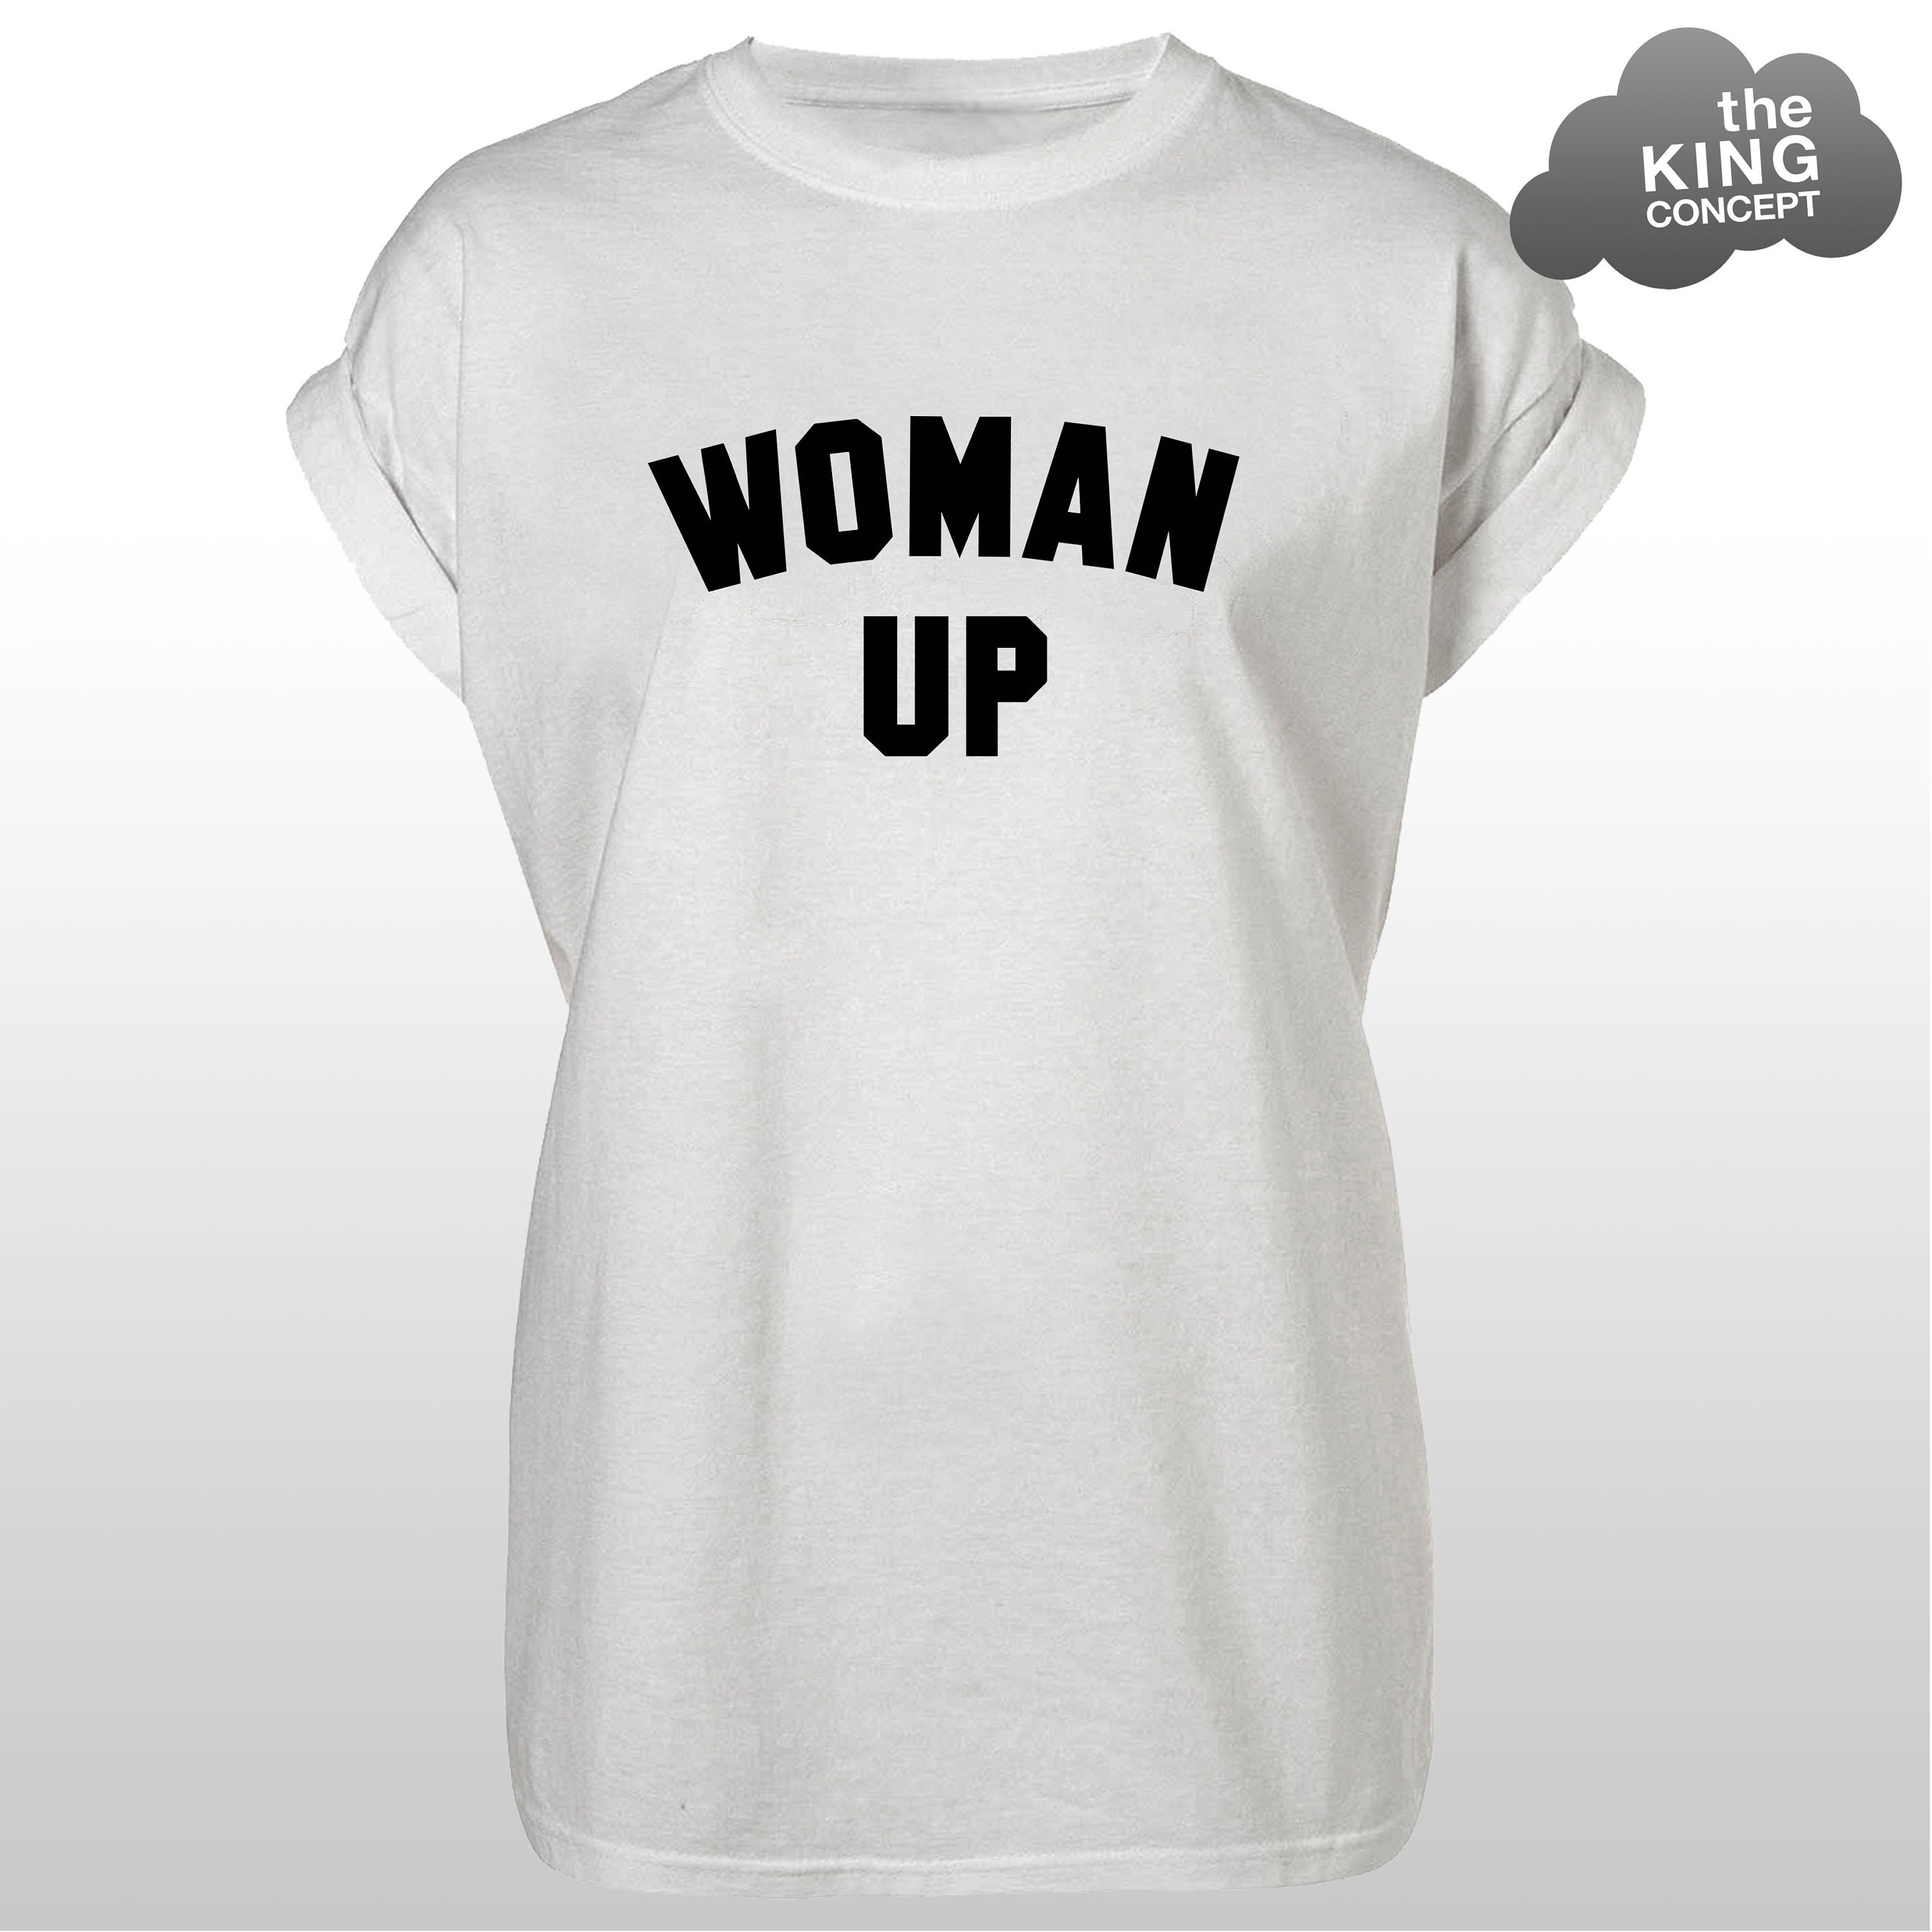 Discover Woman Up T-Shirt Women Up Shirt Feminist Tee Top Womens March Slogan Femanist Future is Female